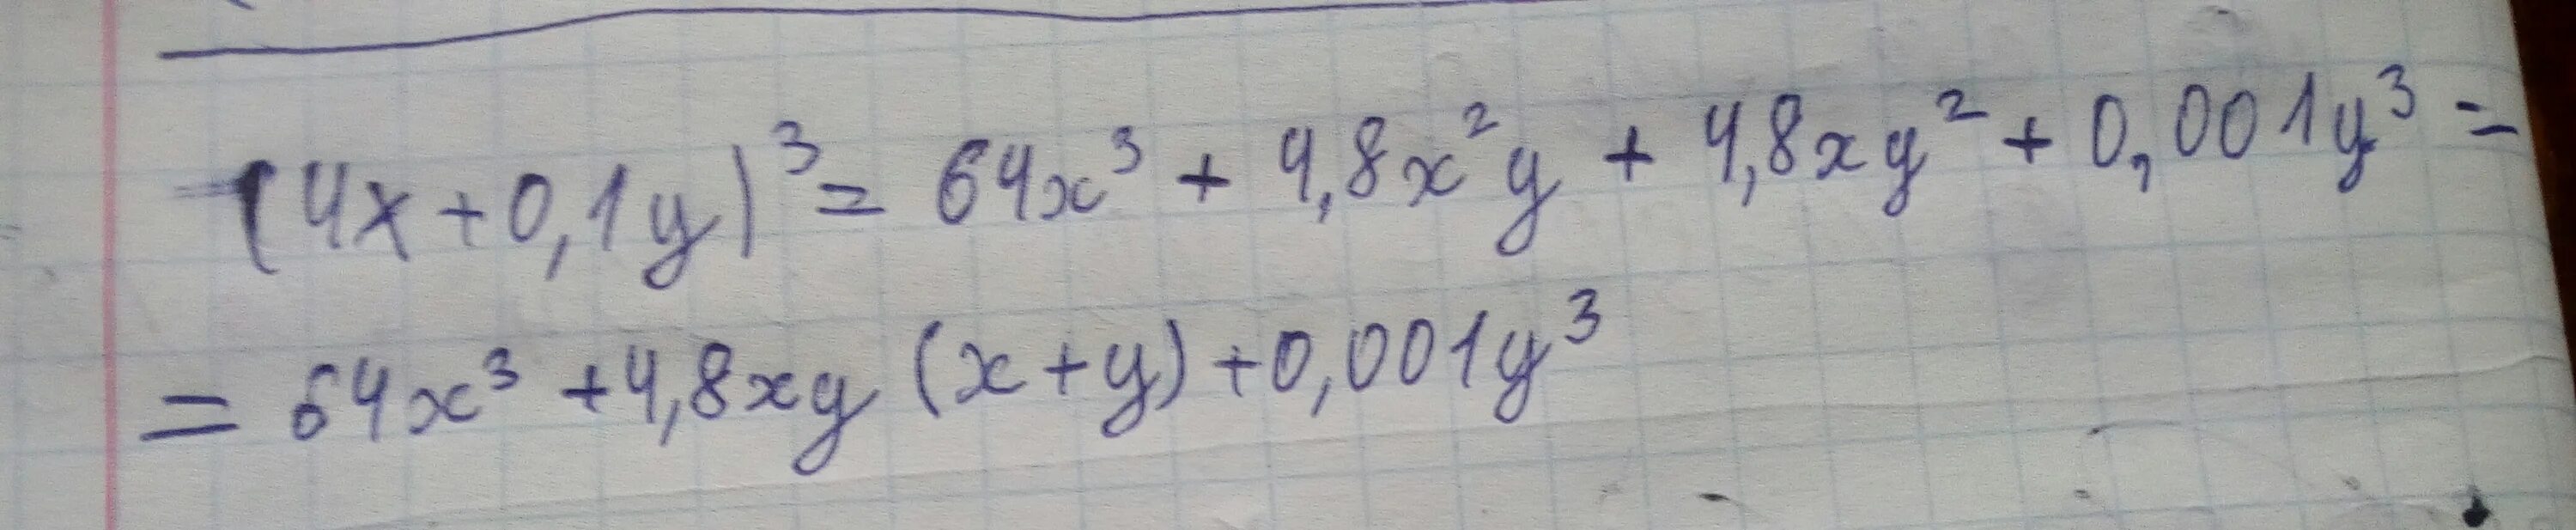 Y= 2 степень =3. X Y В 3 степени во 2 степени. (X-3) В 3 степени. Y В степени 1/3.